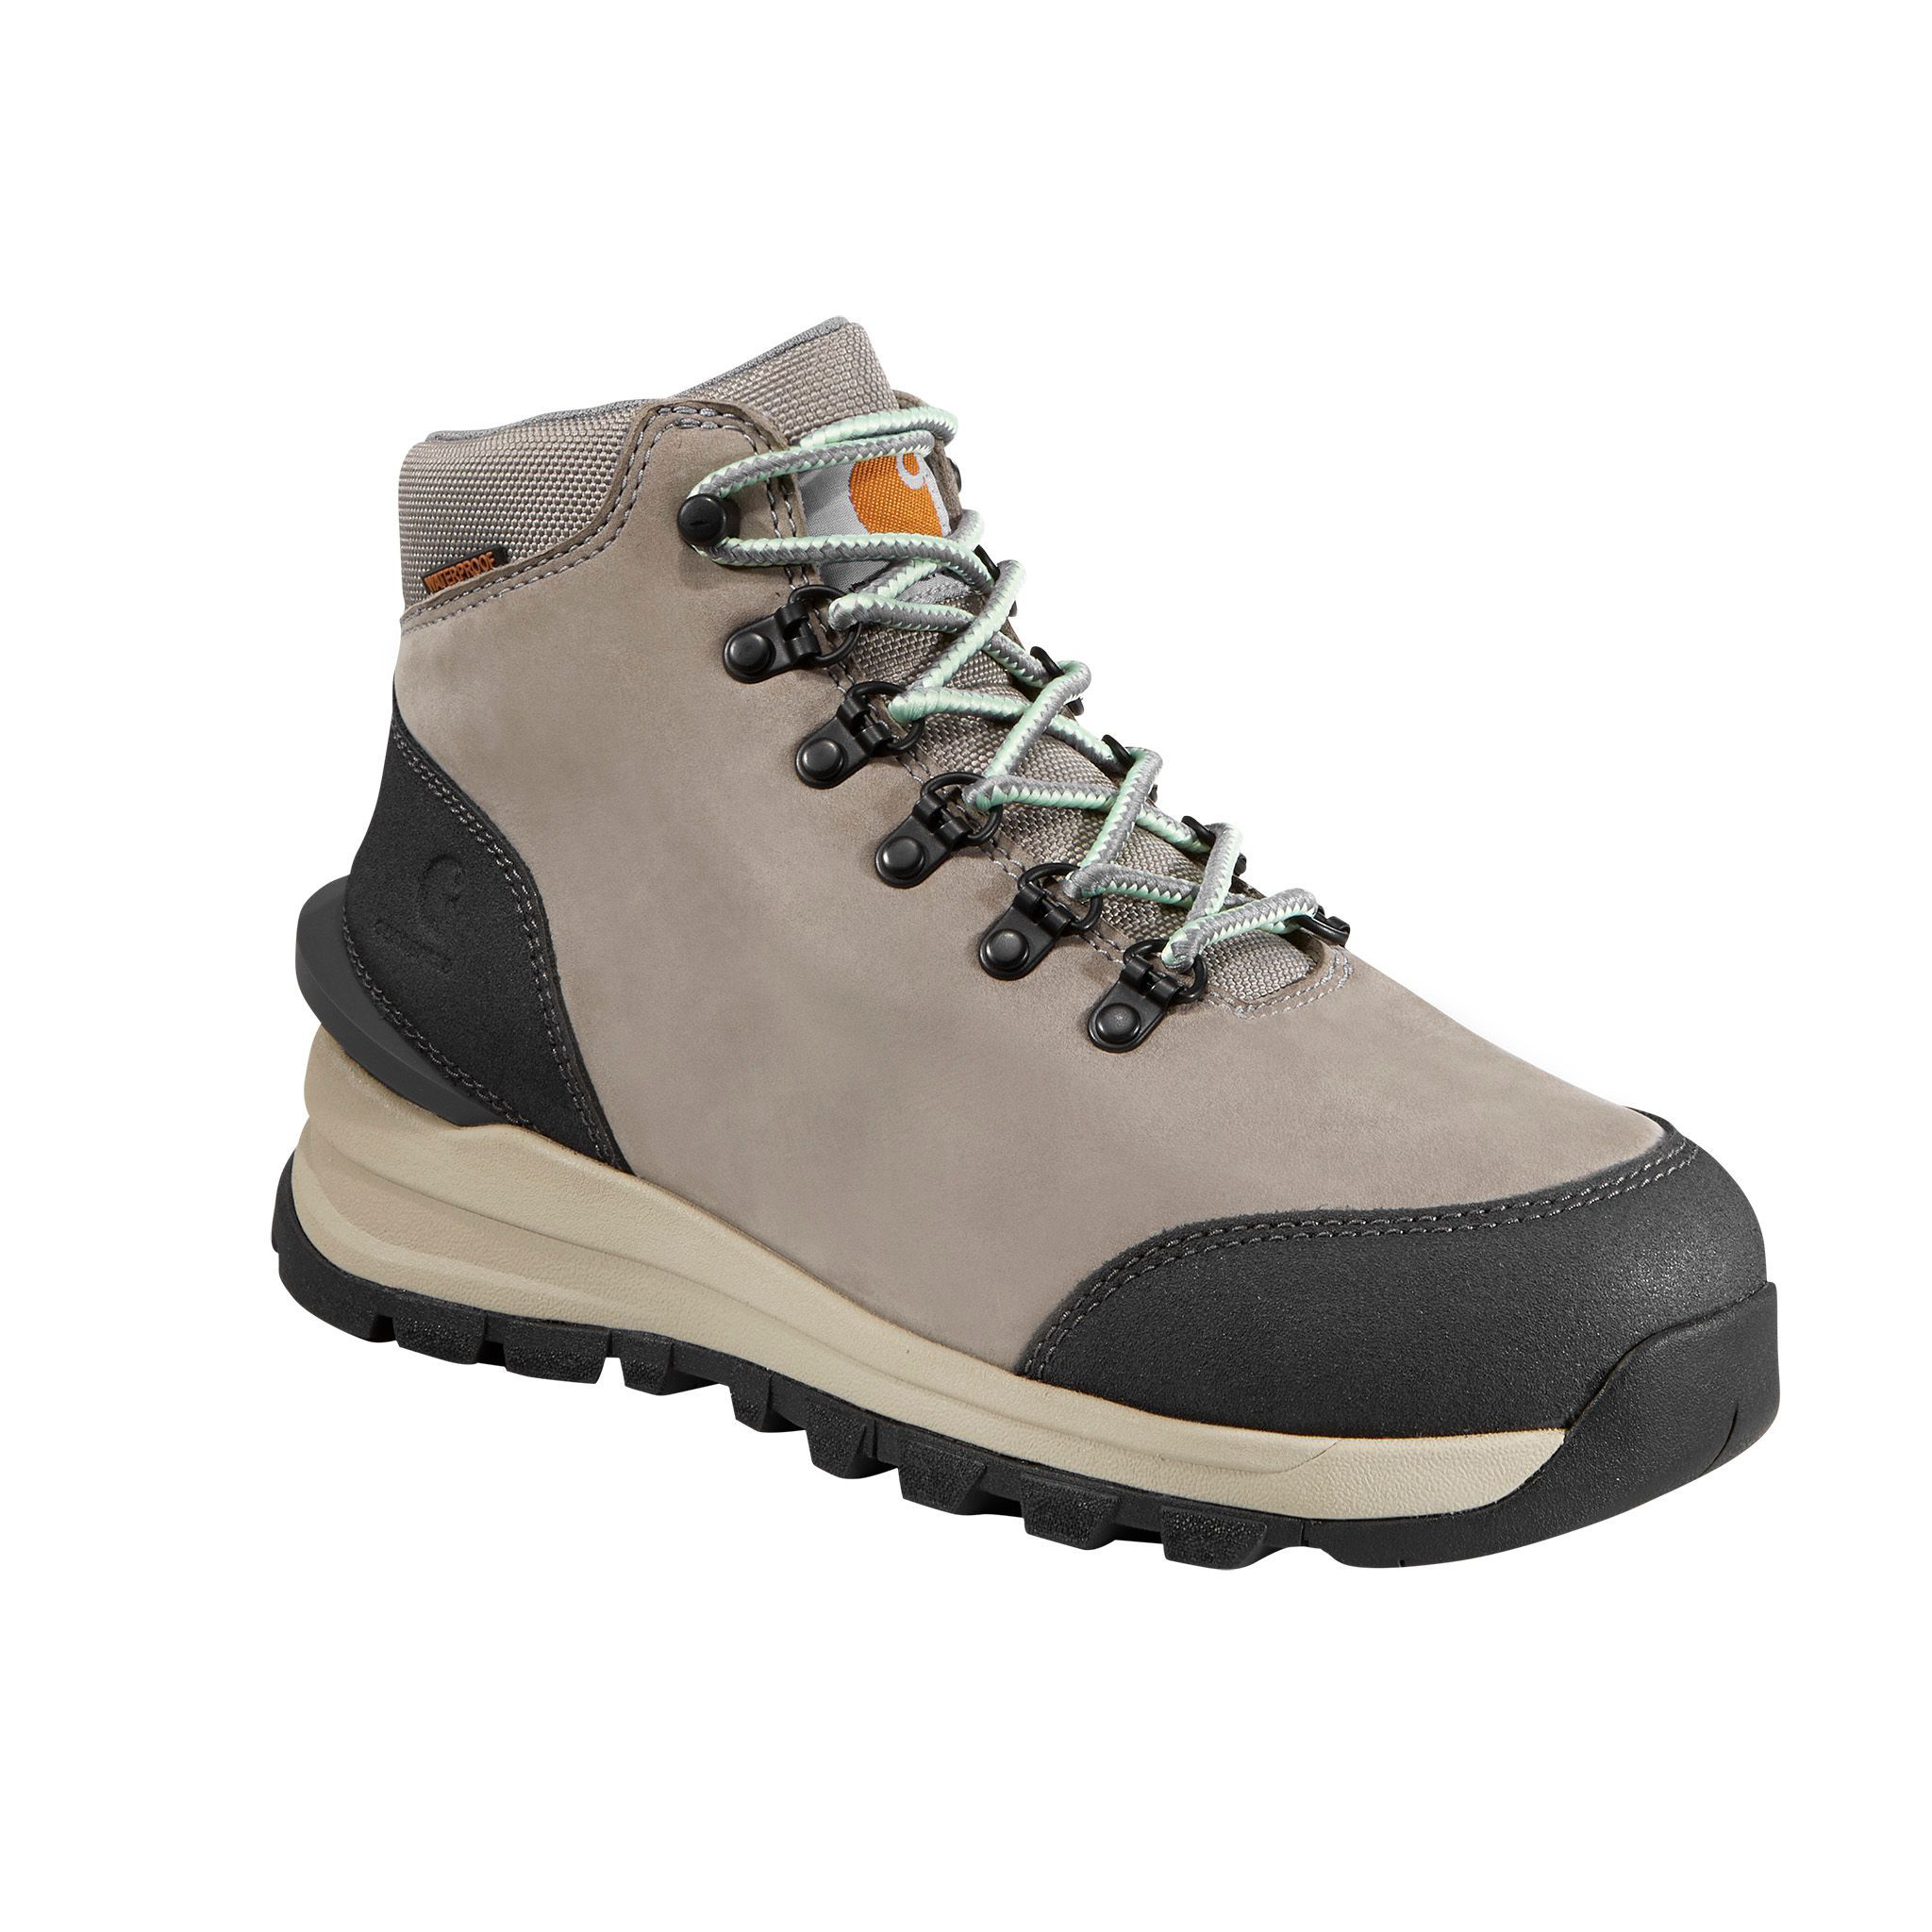 Carhartt Gilmore Waterproof Hiking Boots for Ladies - Grey Nubuck - 9M